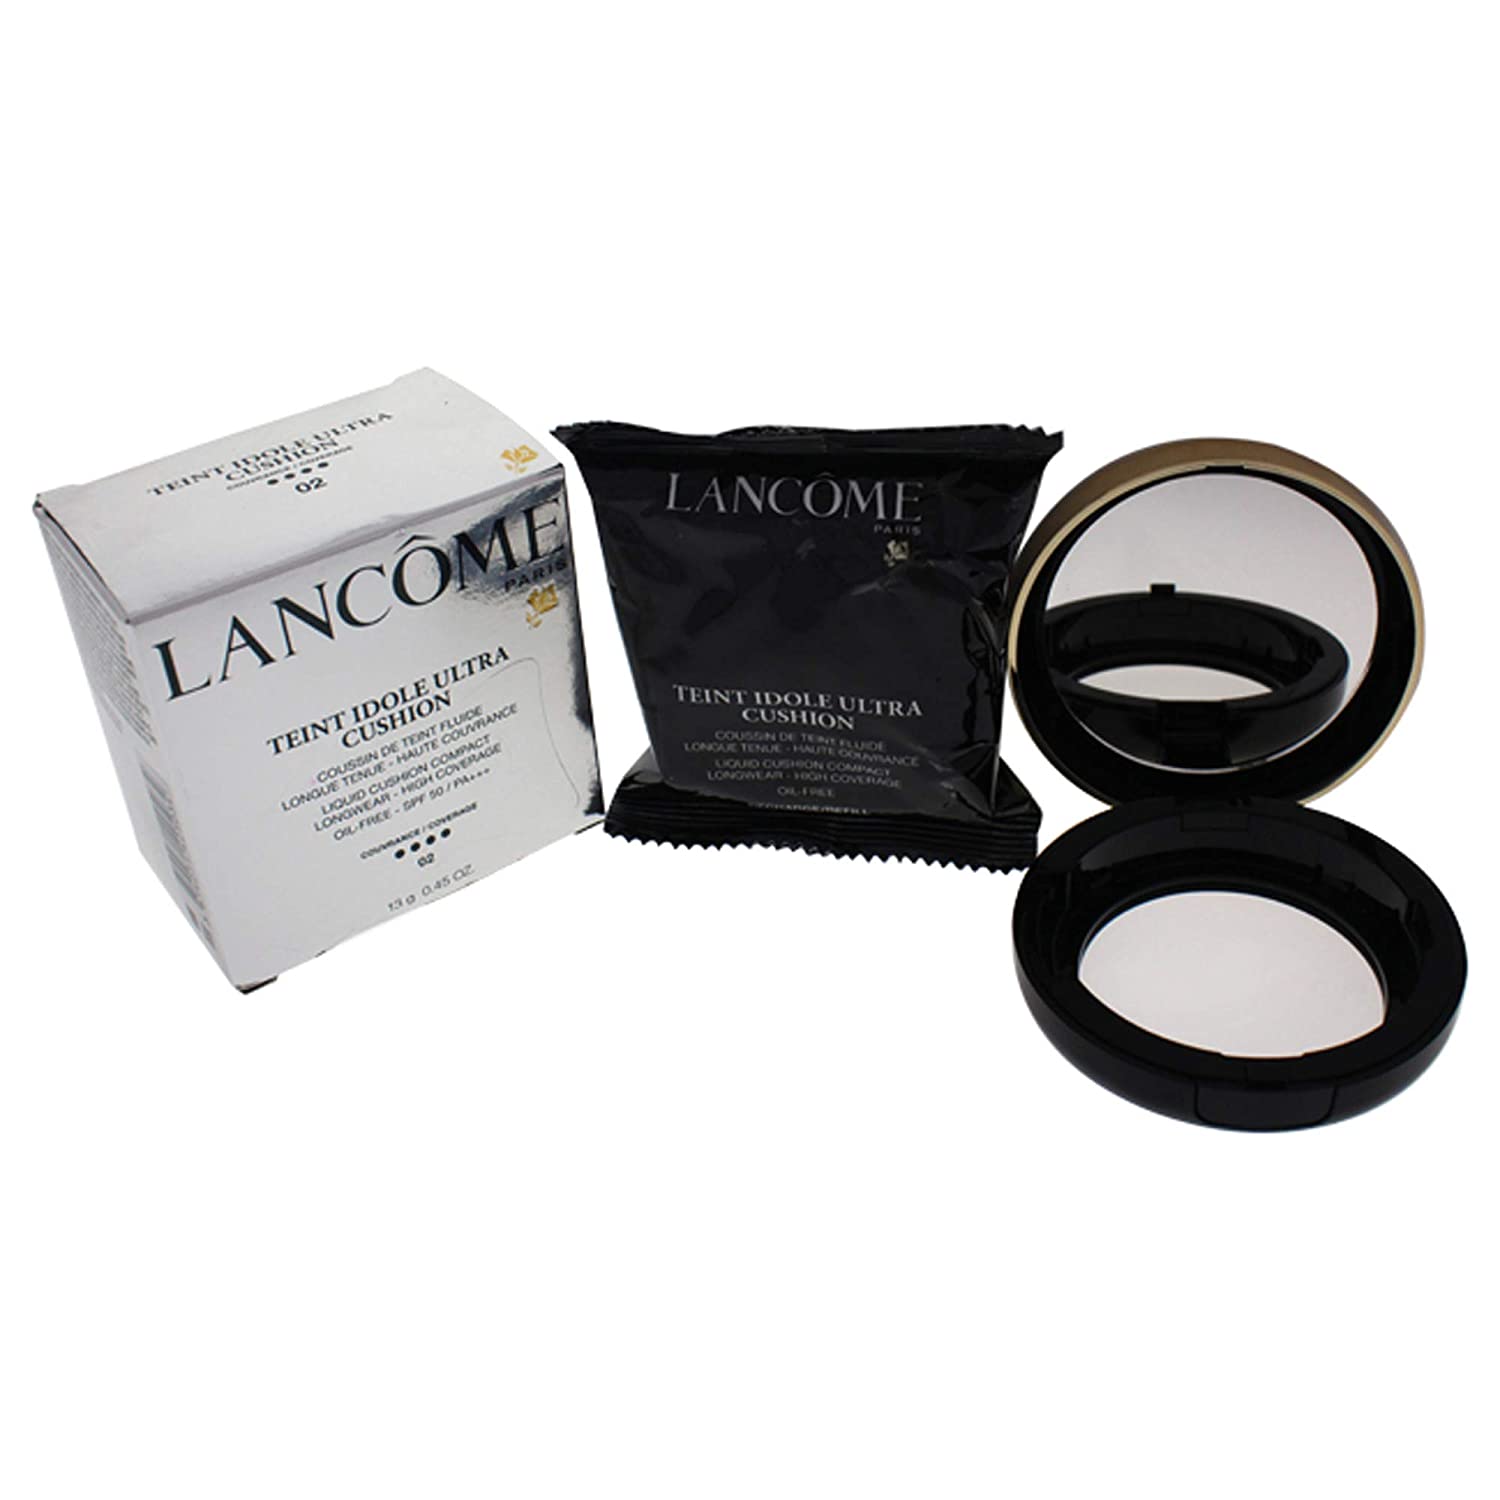 Lancome - Basic make-up complexion Idol Ultra Cushion Lancôme, 